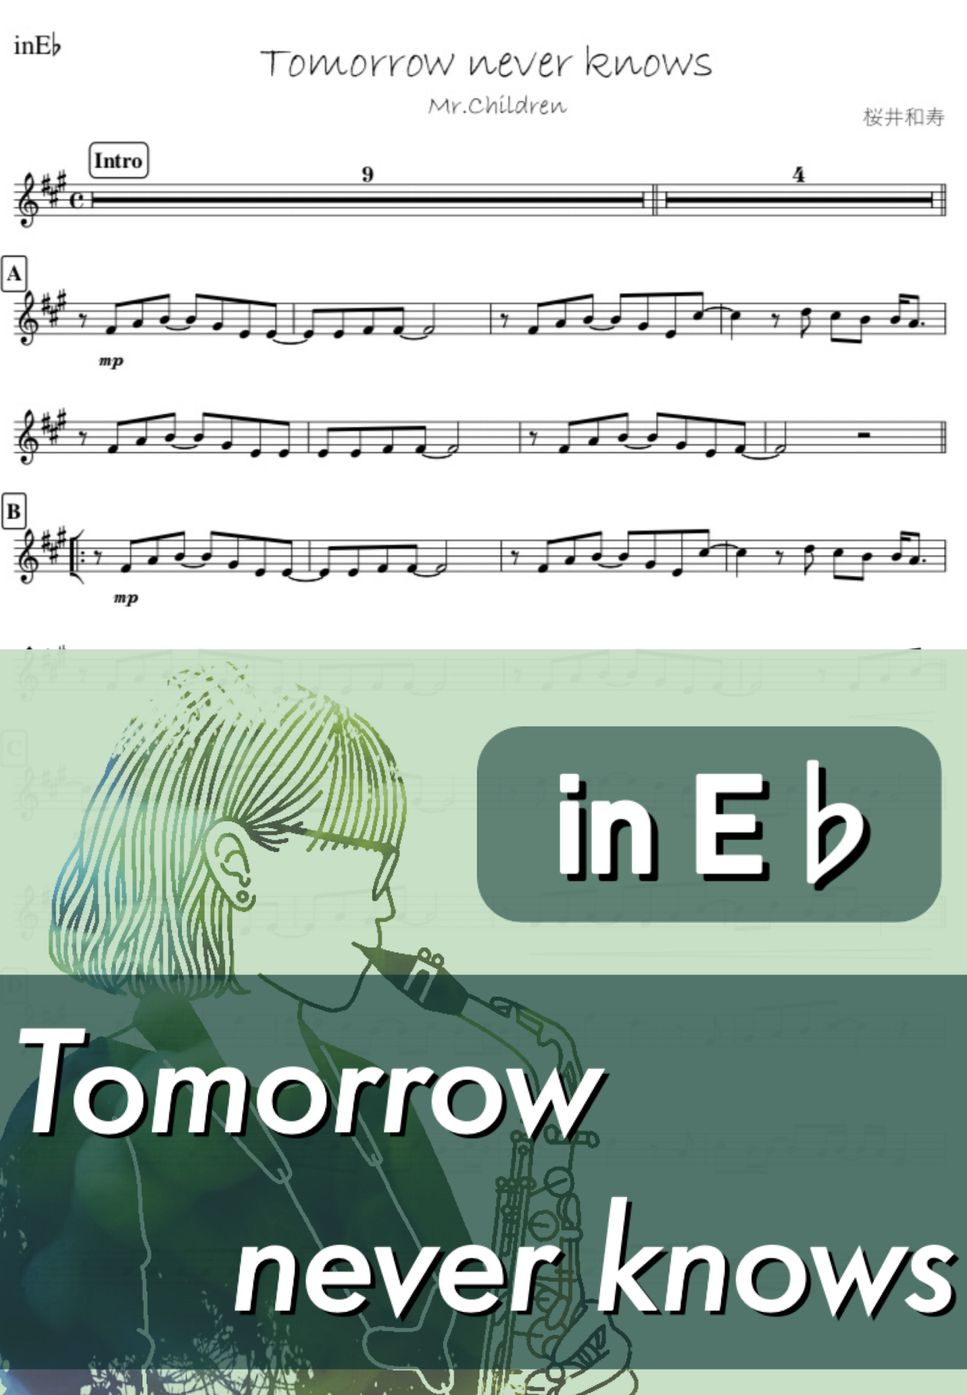 Mr.Children - Tomorrow never knows (E♭) by kanamusic